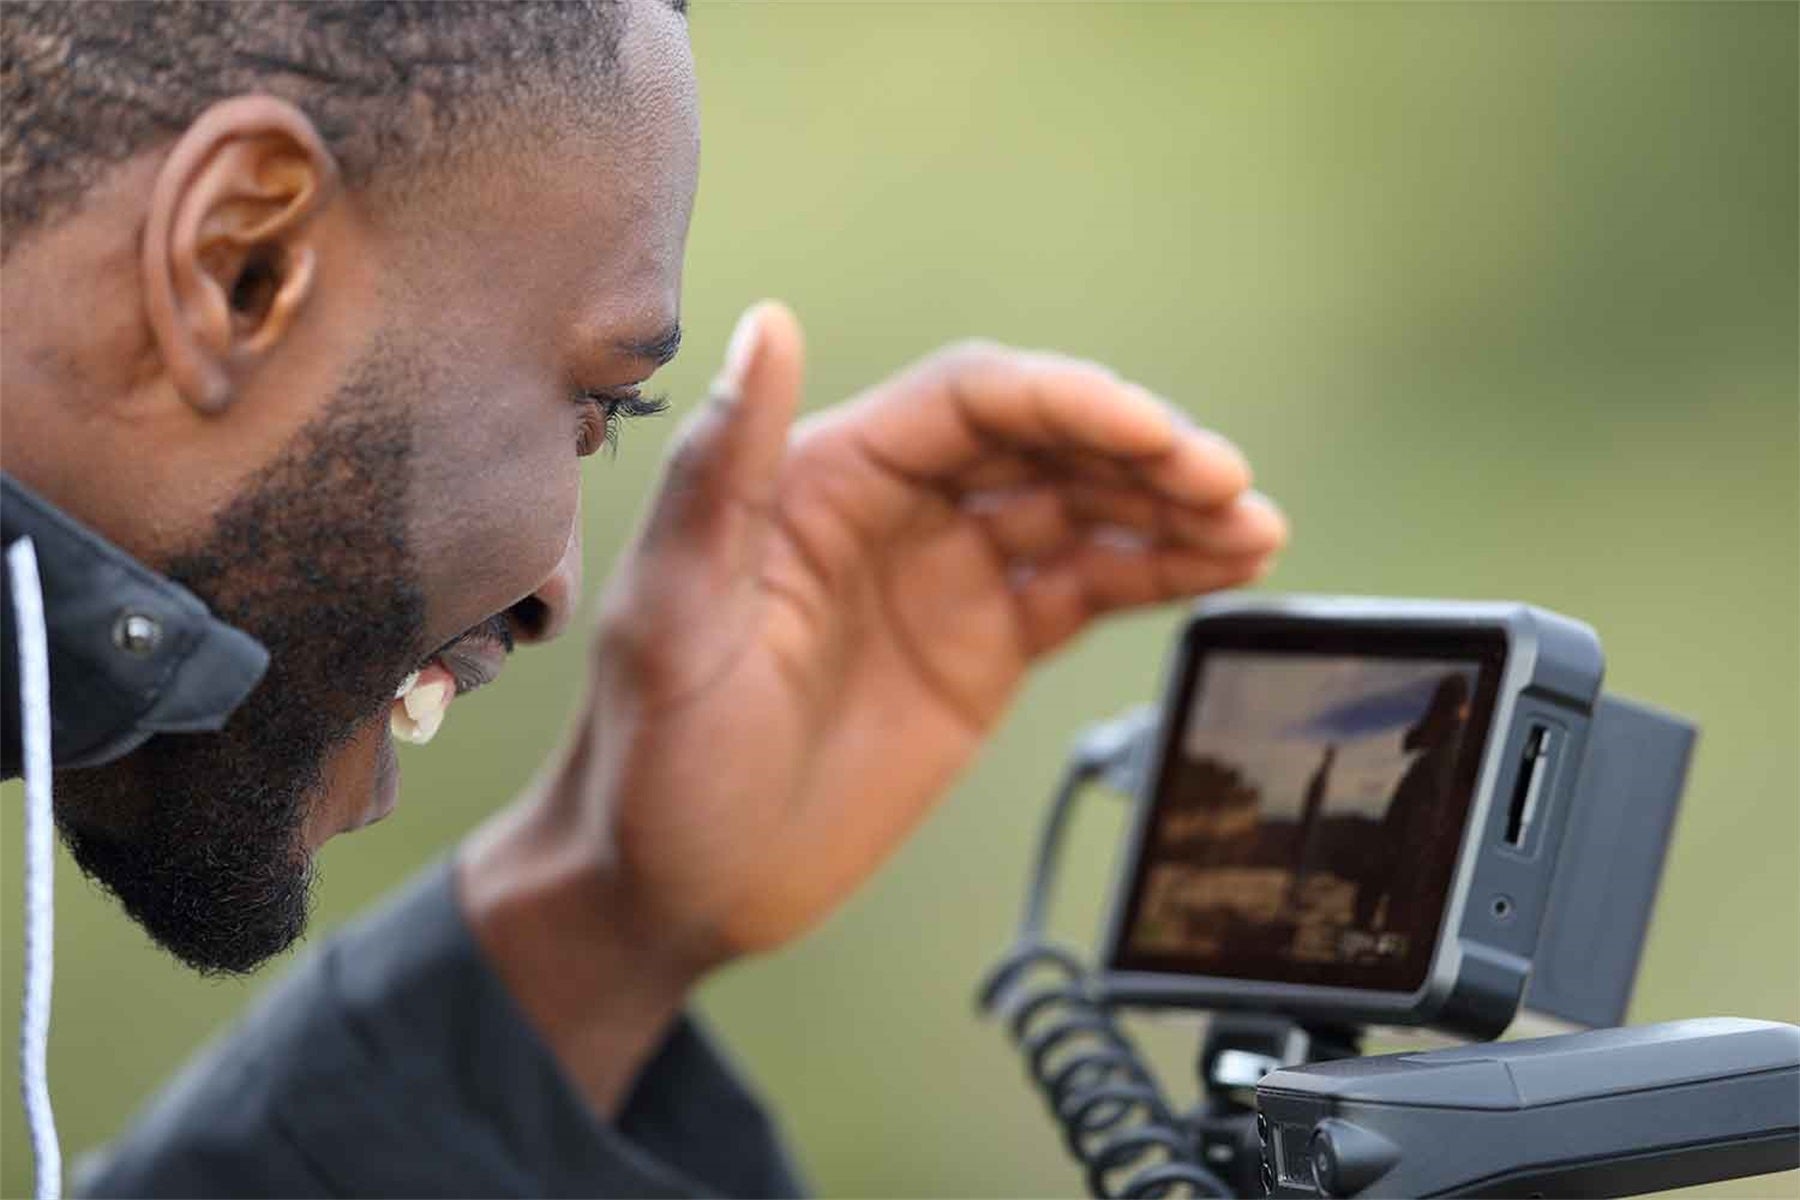 a man is looking at his external camera screen